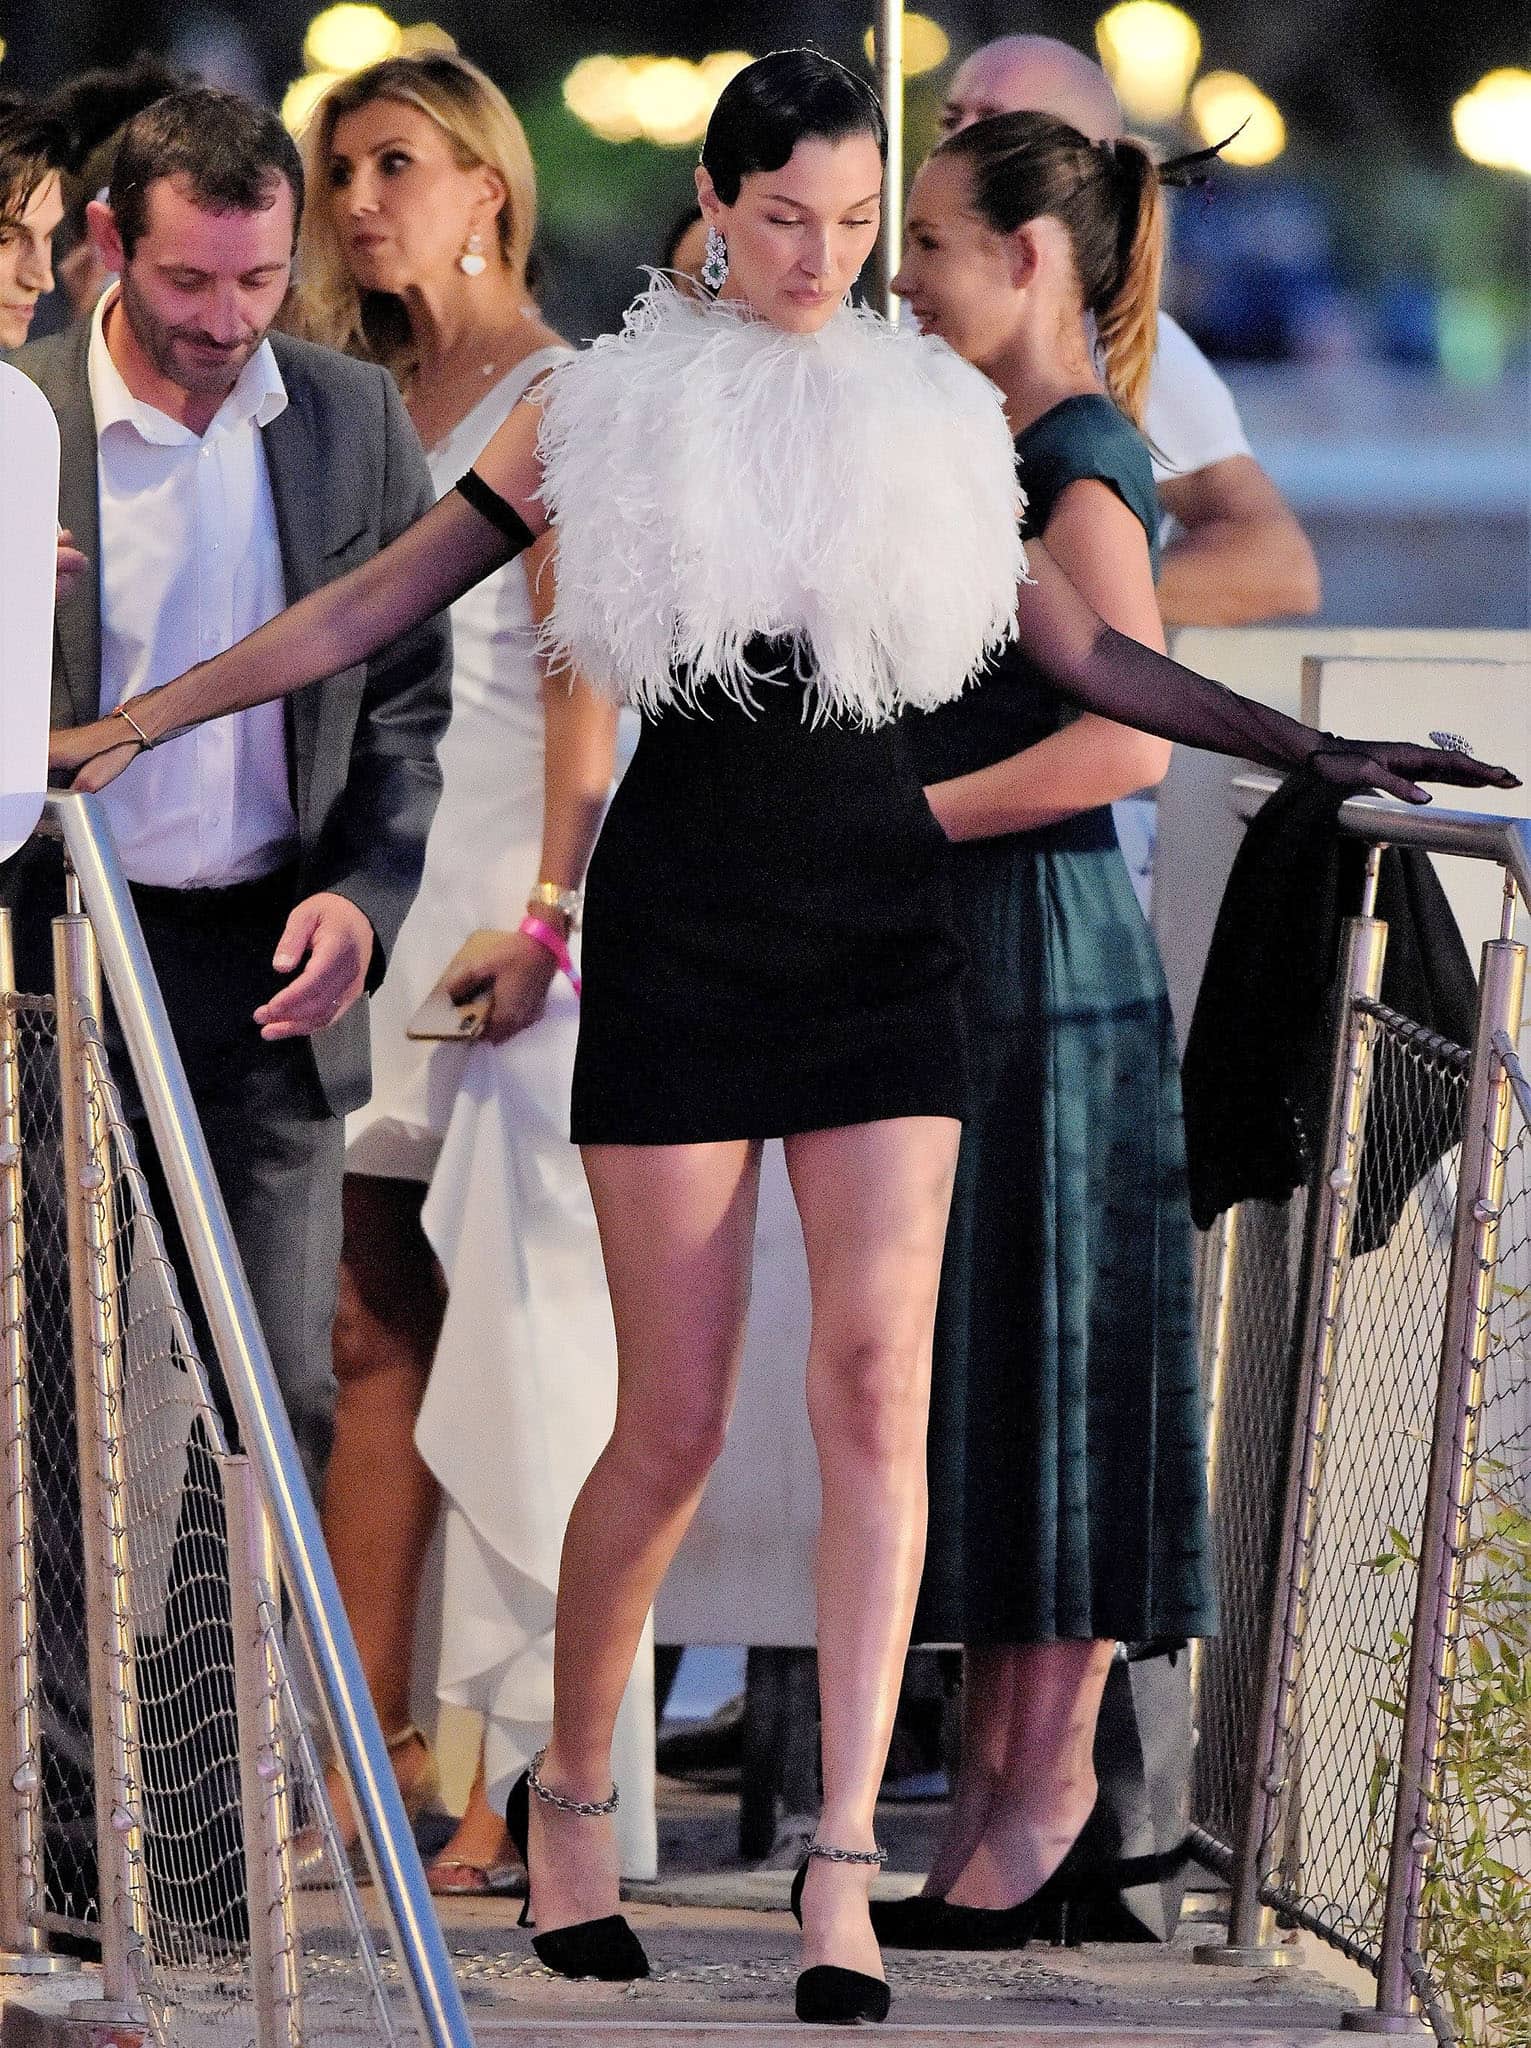 Bella Hadid Stuns in a Dramatic Schiaparelli Gown at Cannes Premiere